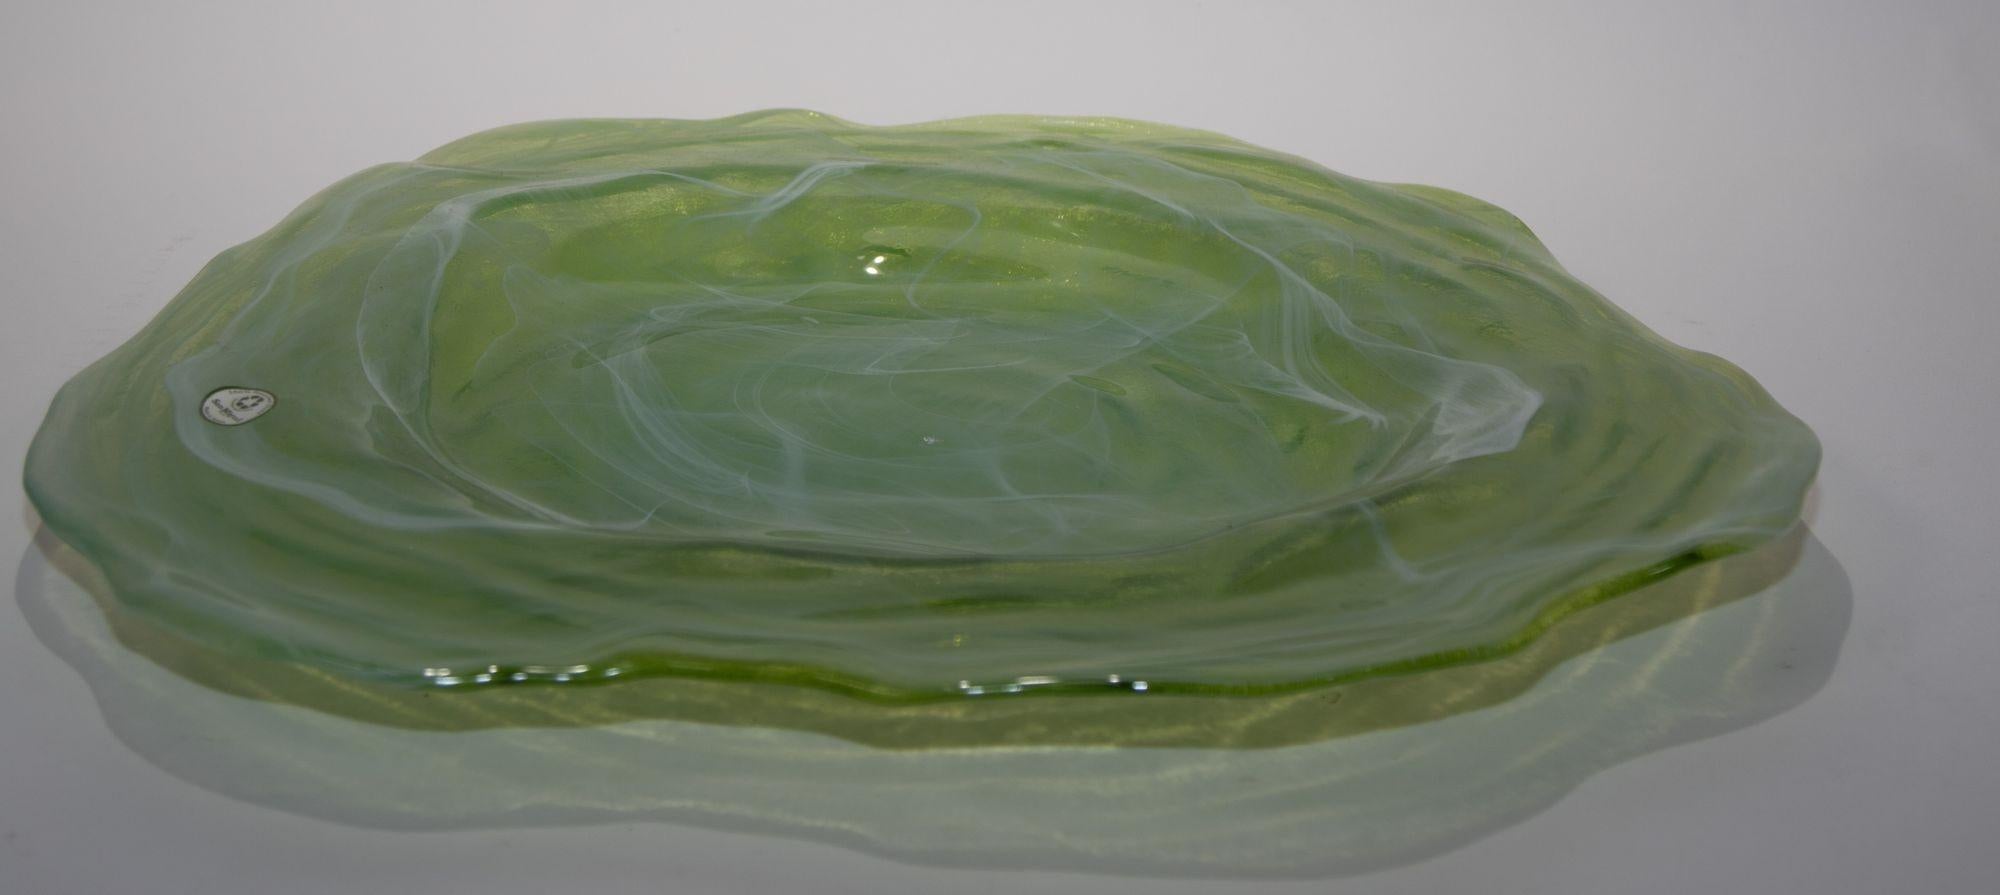 1980, Green Art Glass Platter Made in Spain For Sale 1